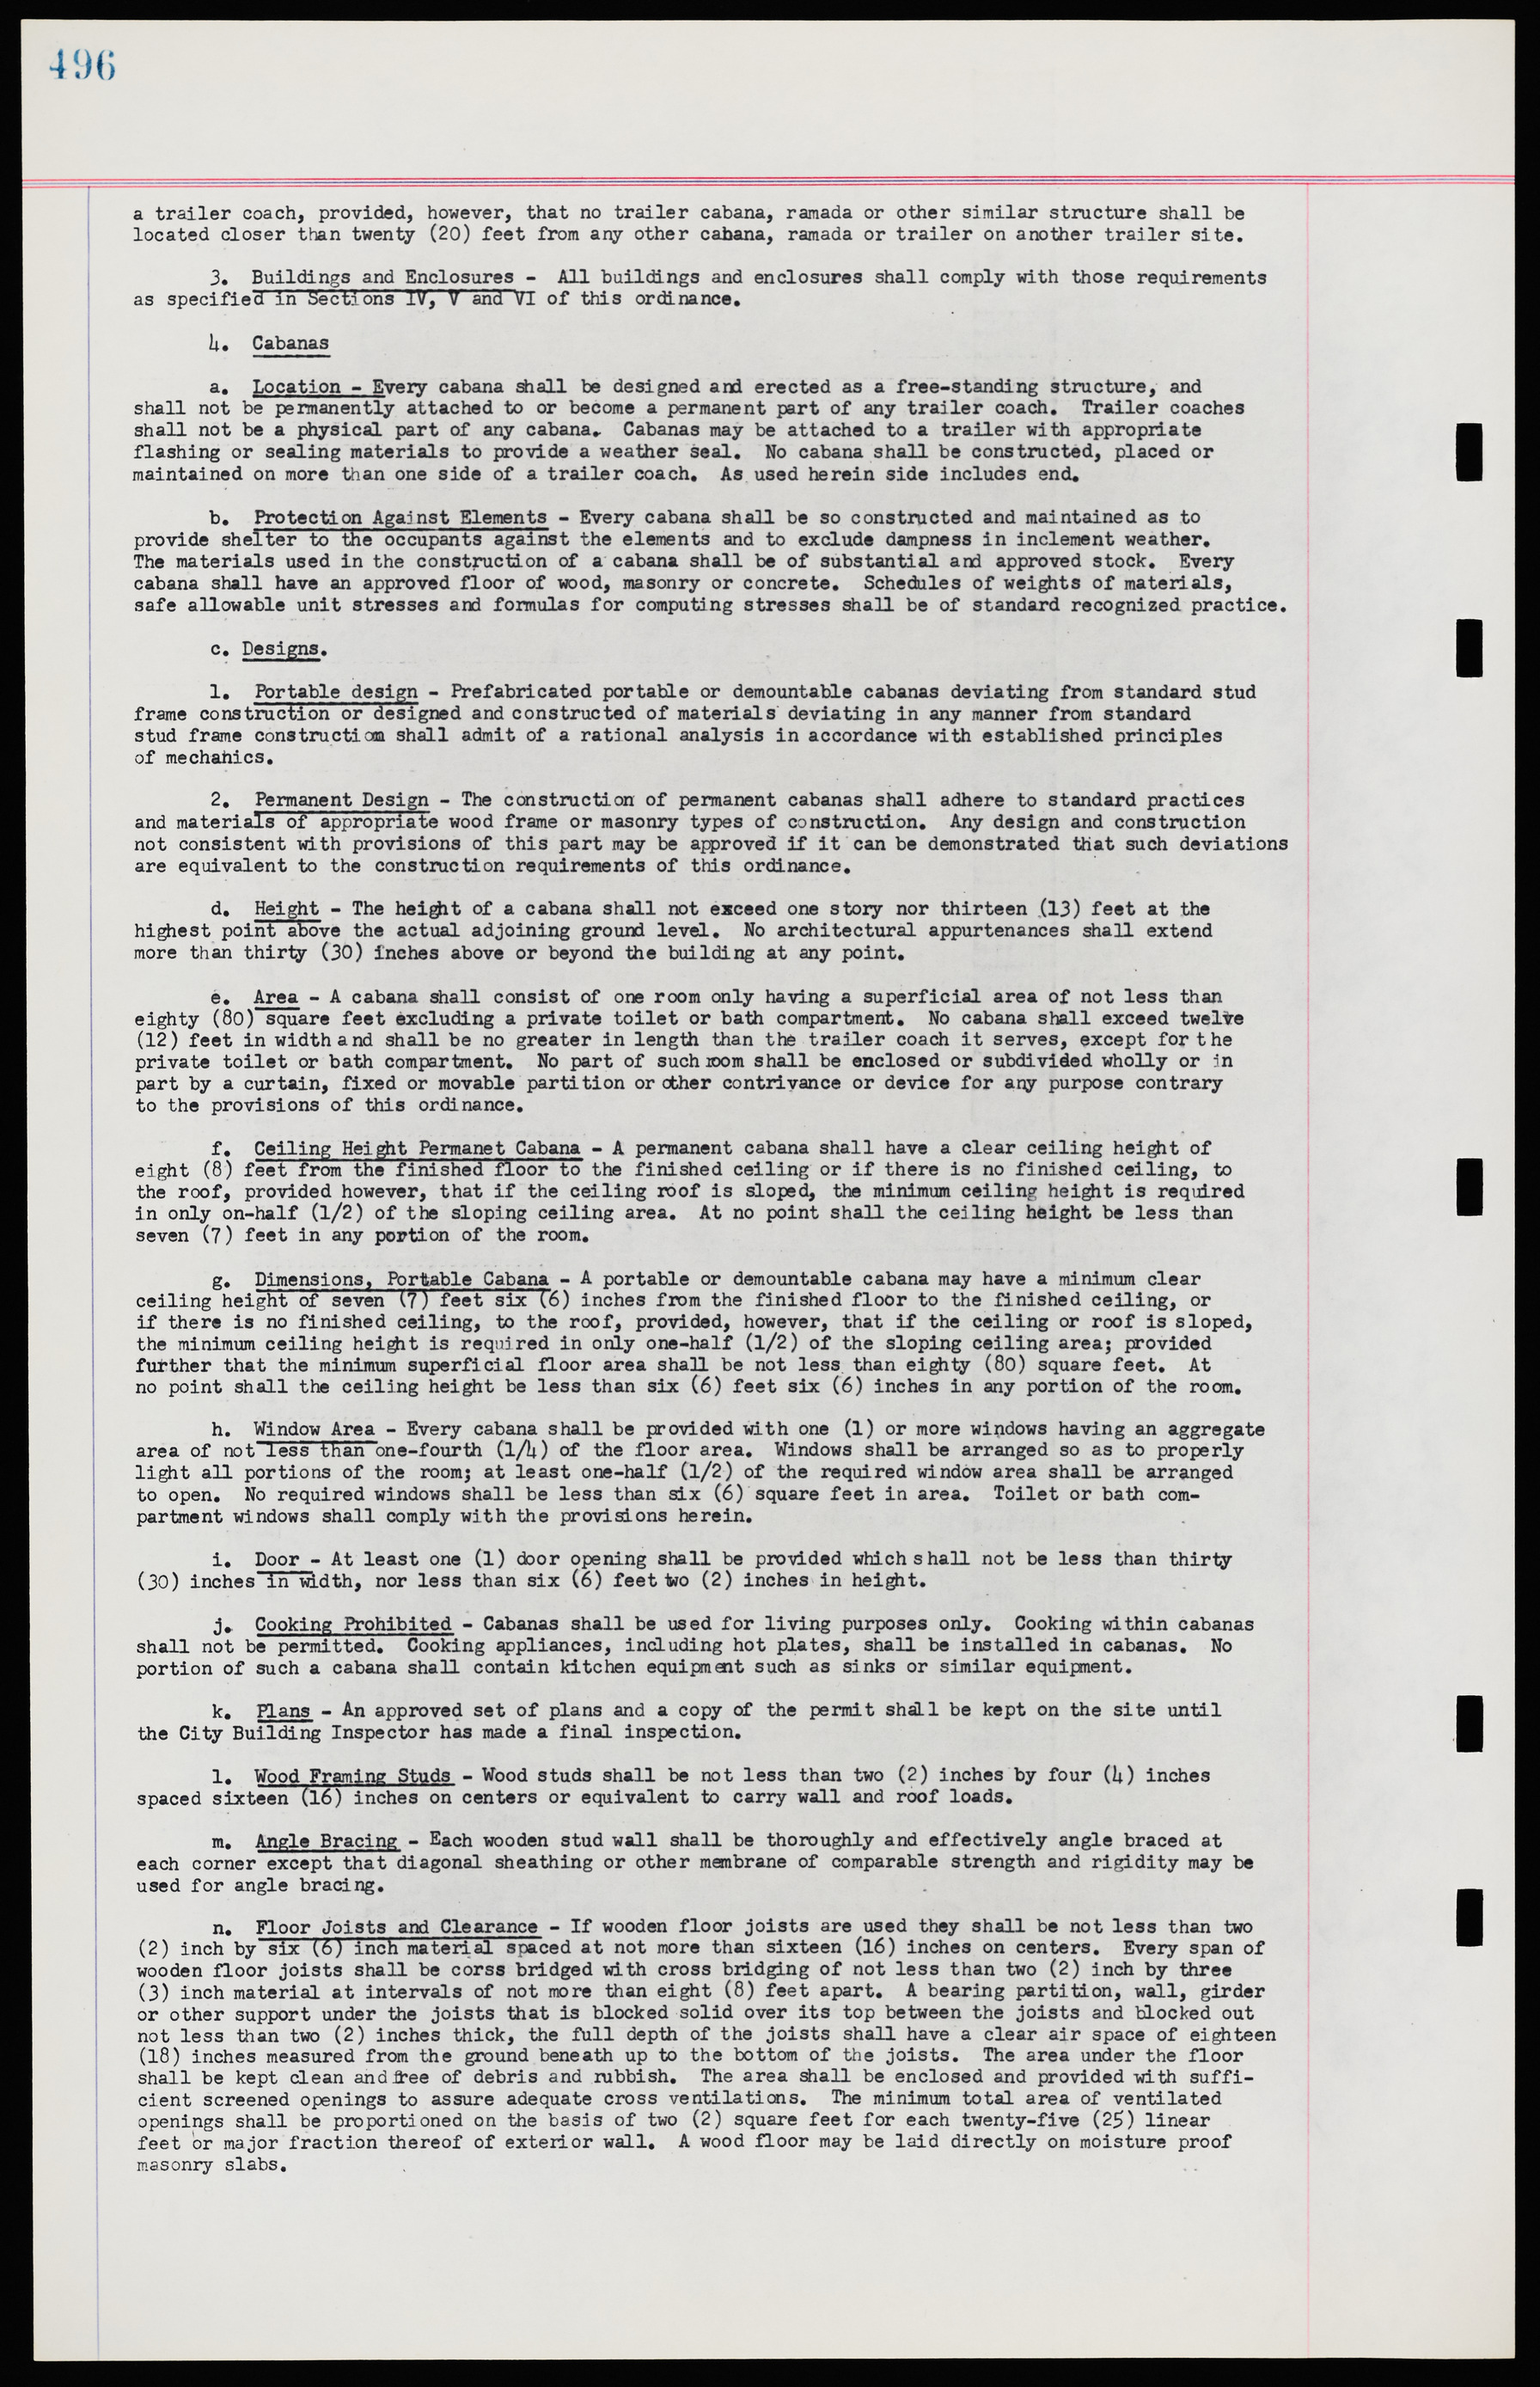 Las Vegas City Ordinances, November 13, 1950 to August 6, 1958, lvc000015-504